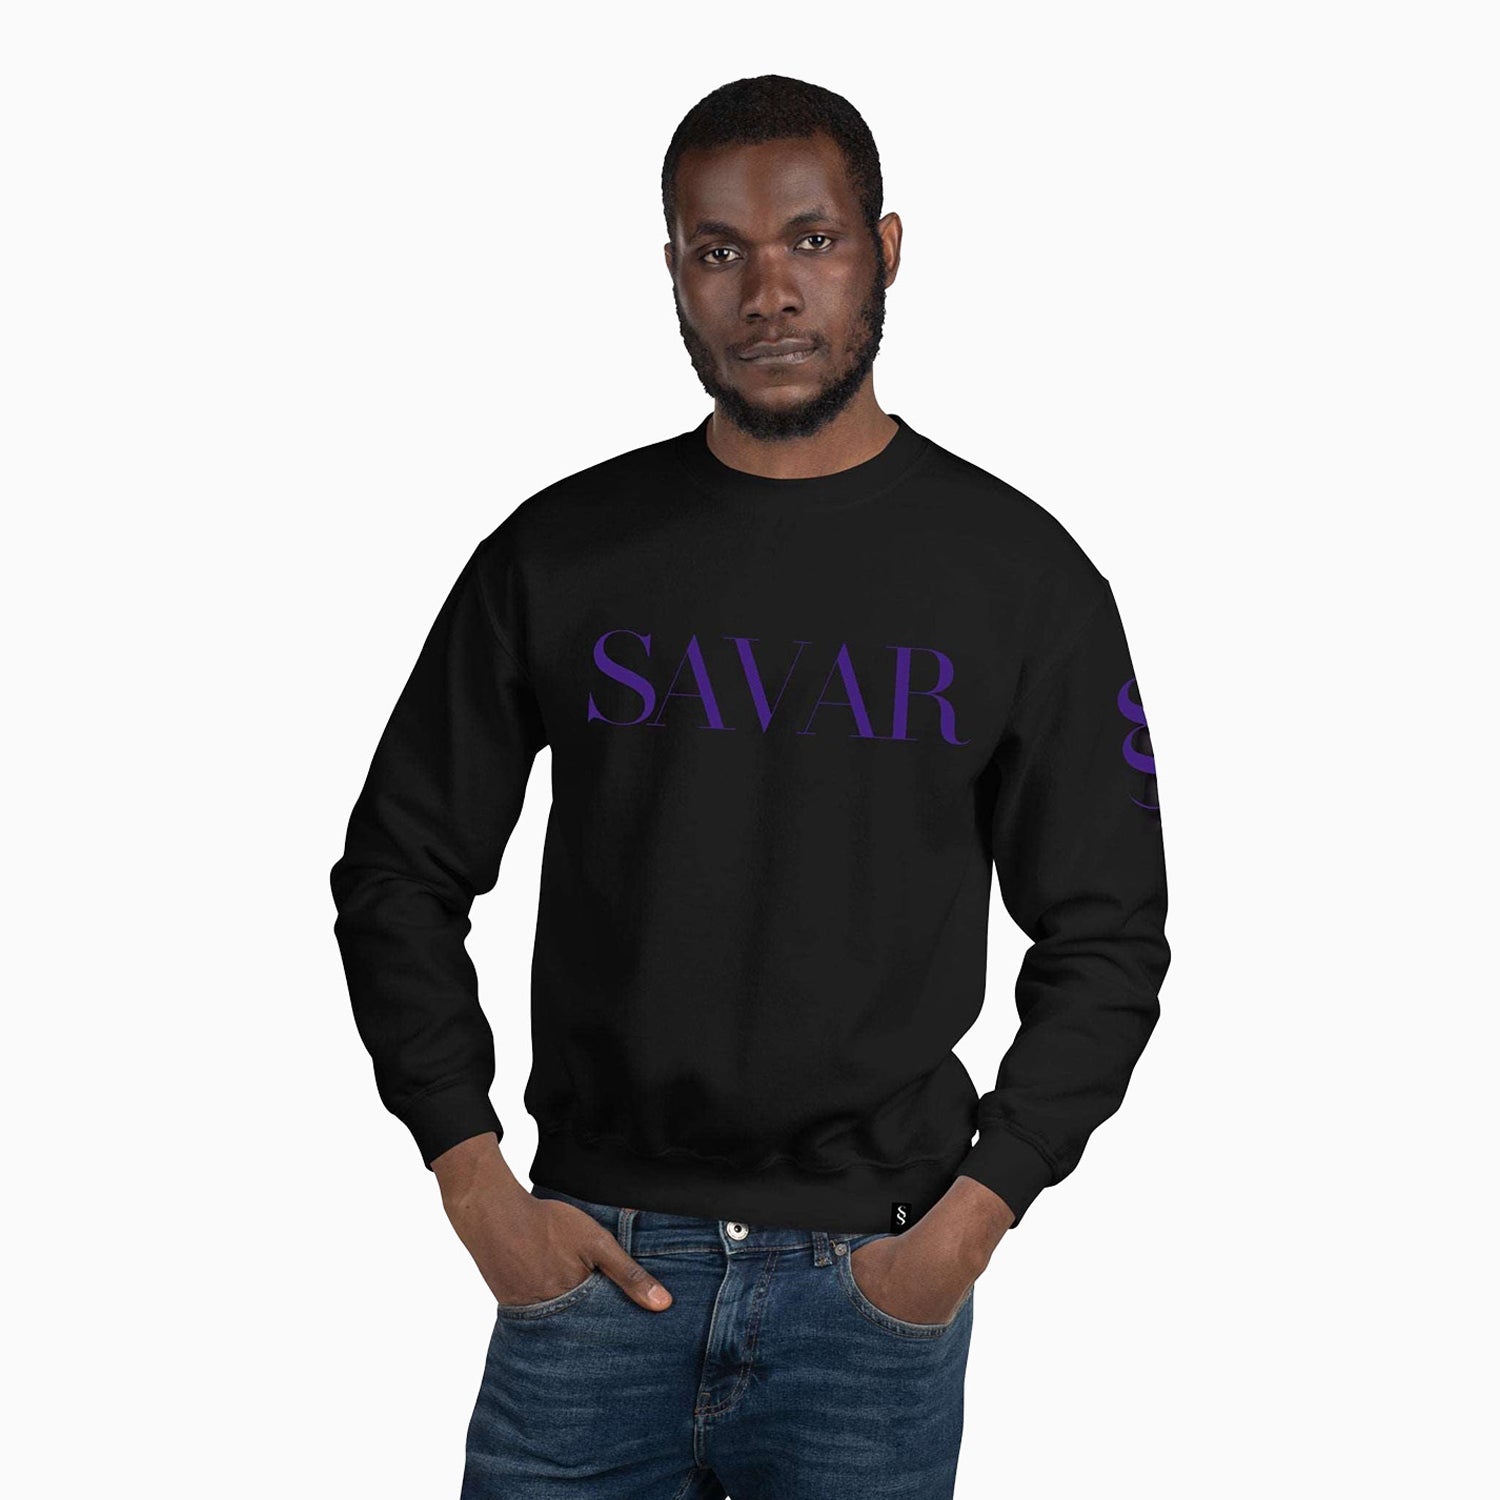 basic-design-printed-crew-neck-black-sweatshirt-for-men-sc105-010